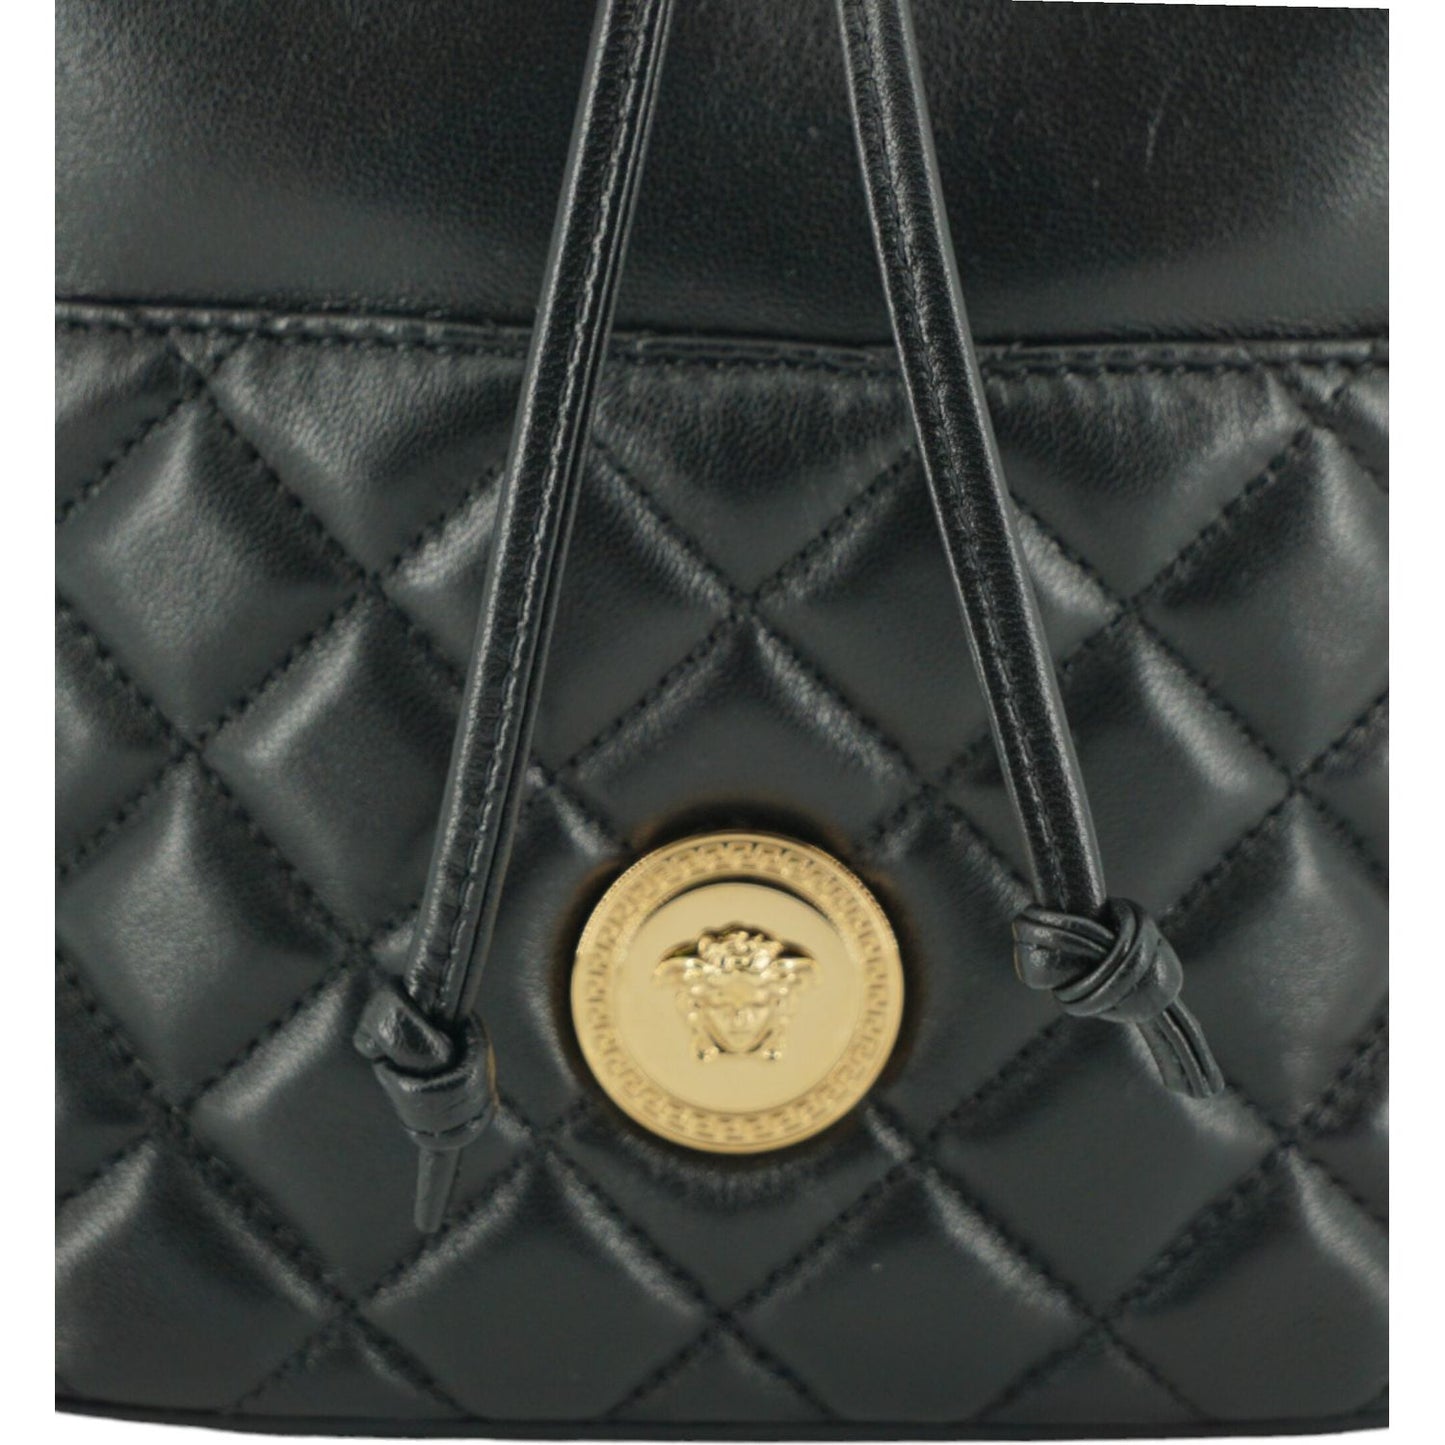 Versace Black Calf Leather Small Bucket Shoulder Bag black-calf-leather-small-bucket-shoulder-bag DSC01116-scaled-1d995083-314.jpg